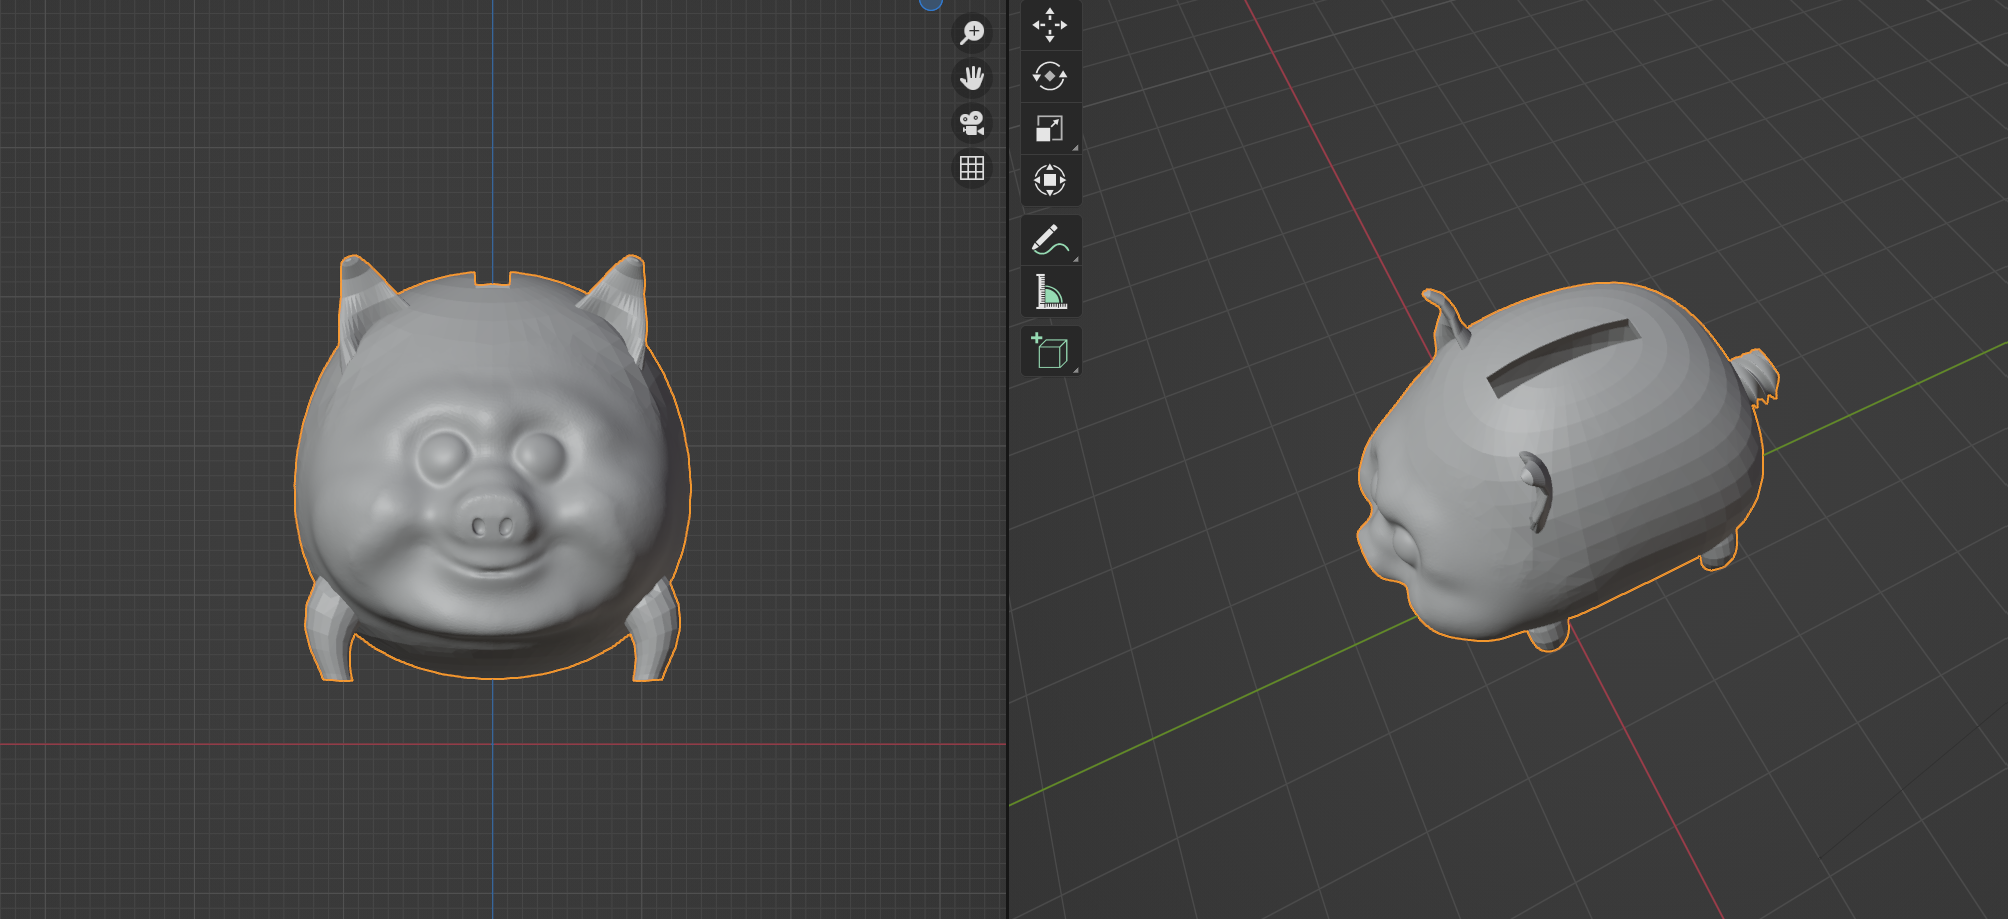 My piggy bank model in Blender.